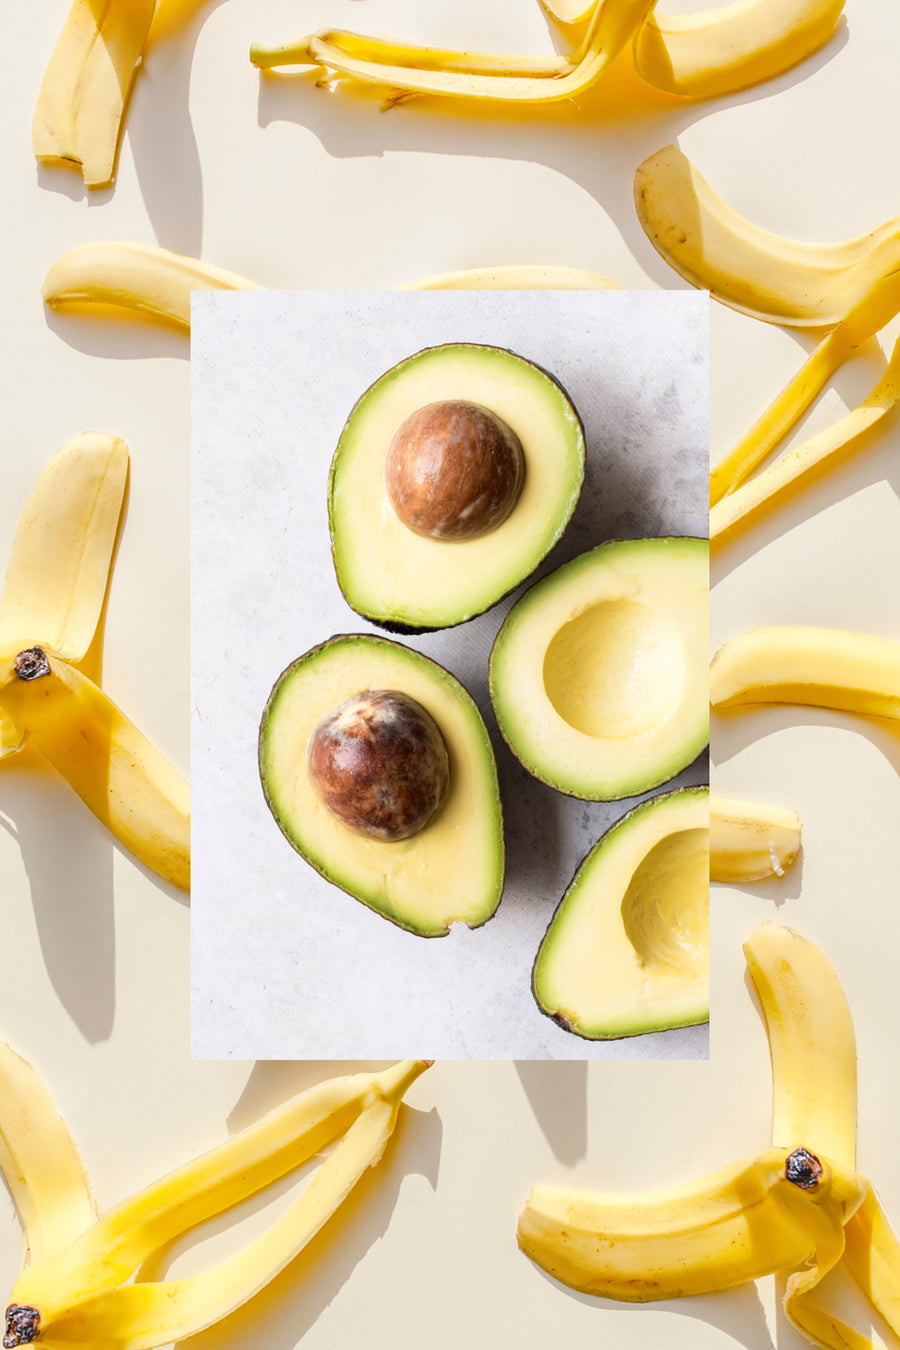 ingredient avocado and banana